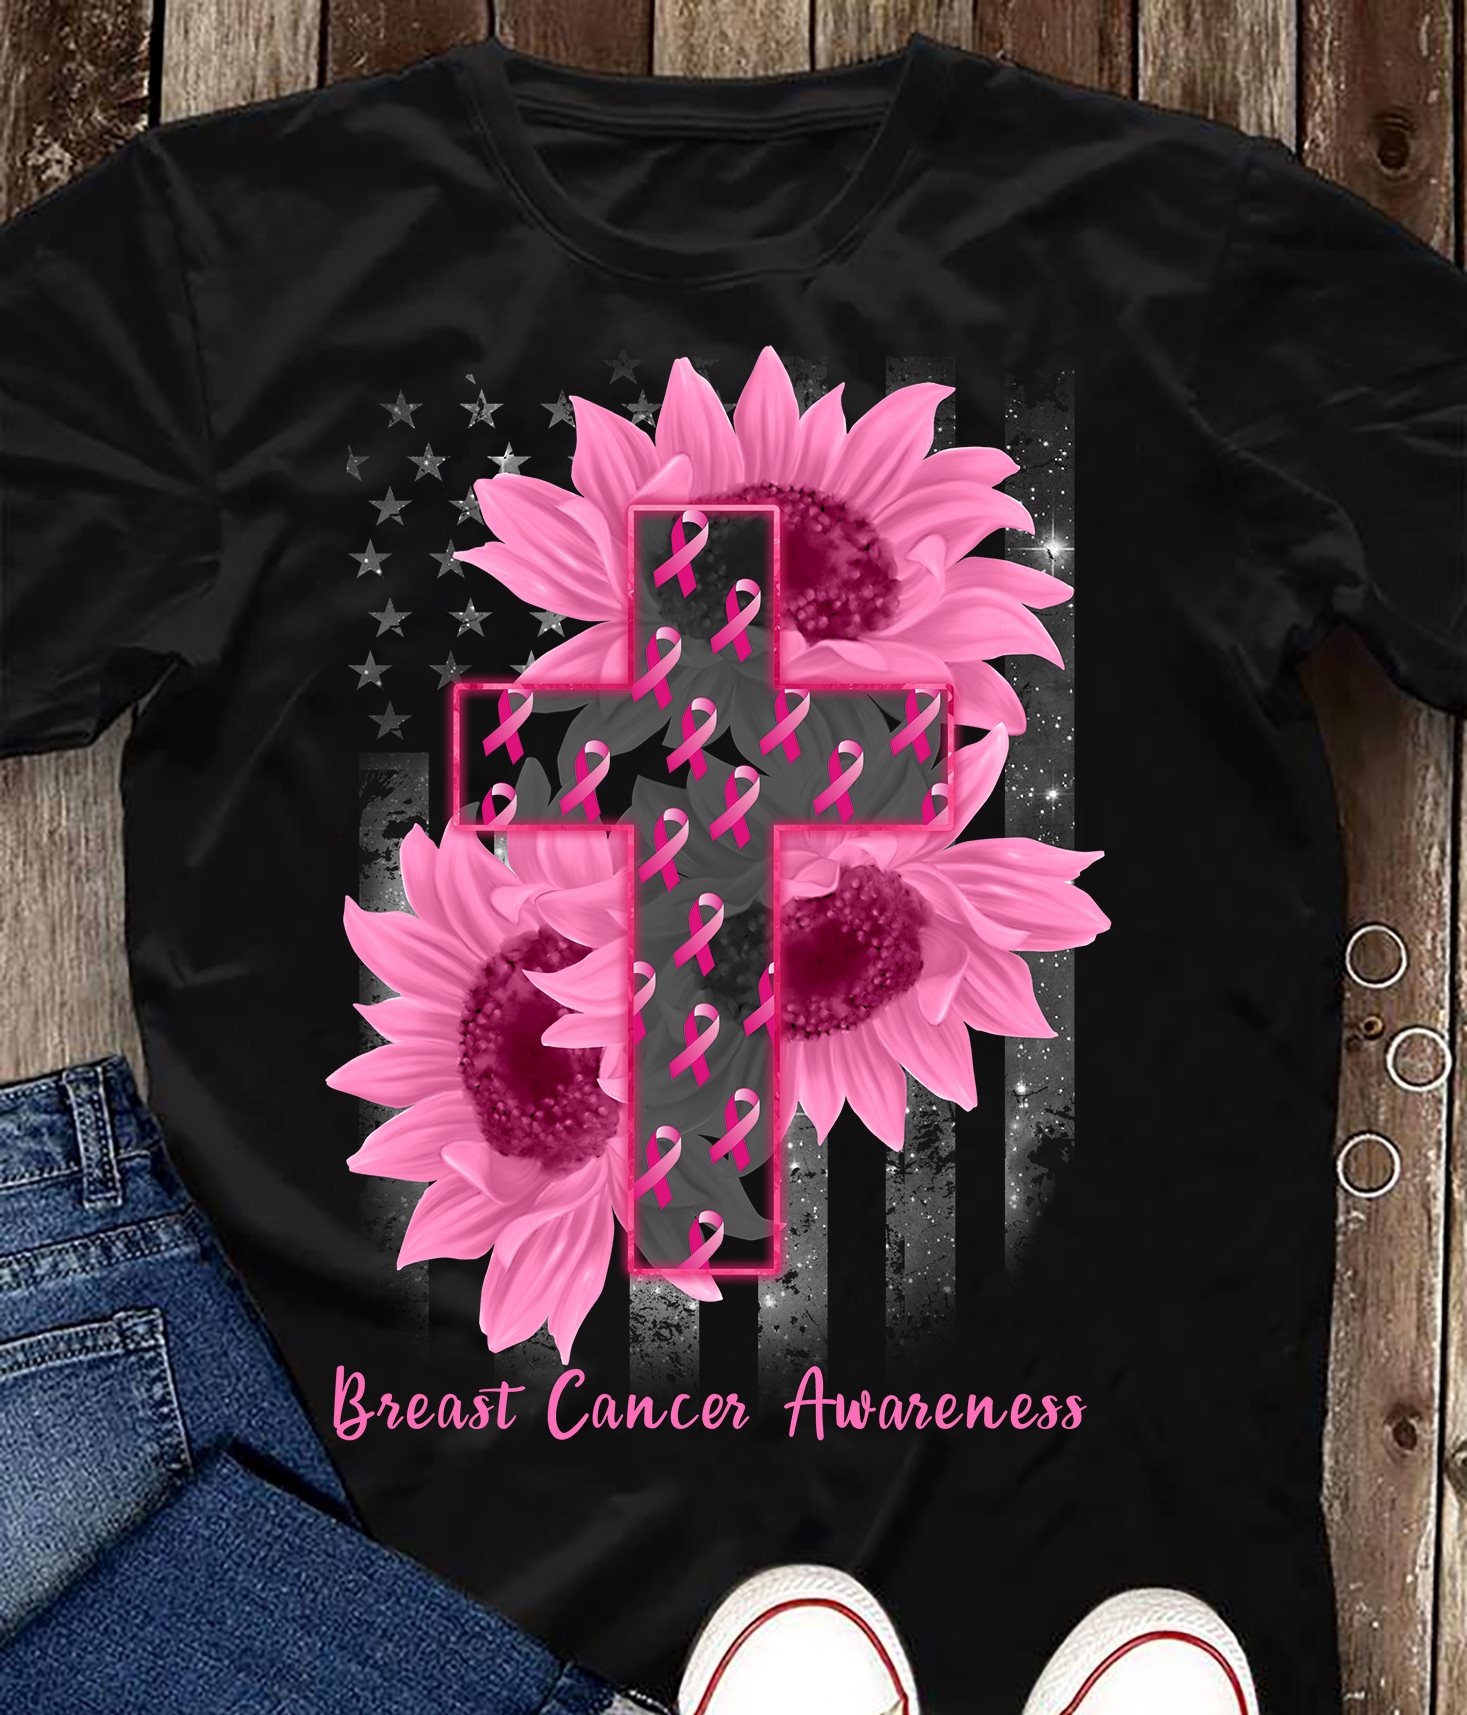 The Cross Sunflower Flag Breast Cancer Awareness